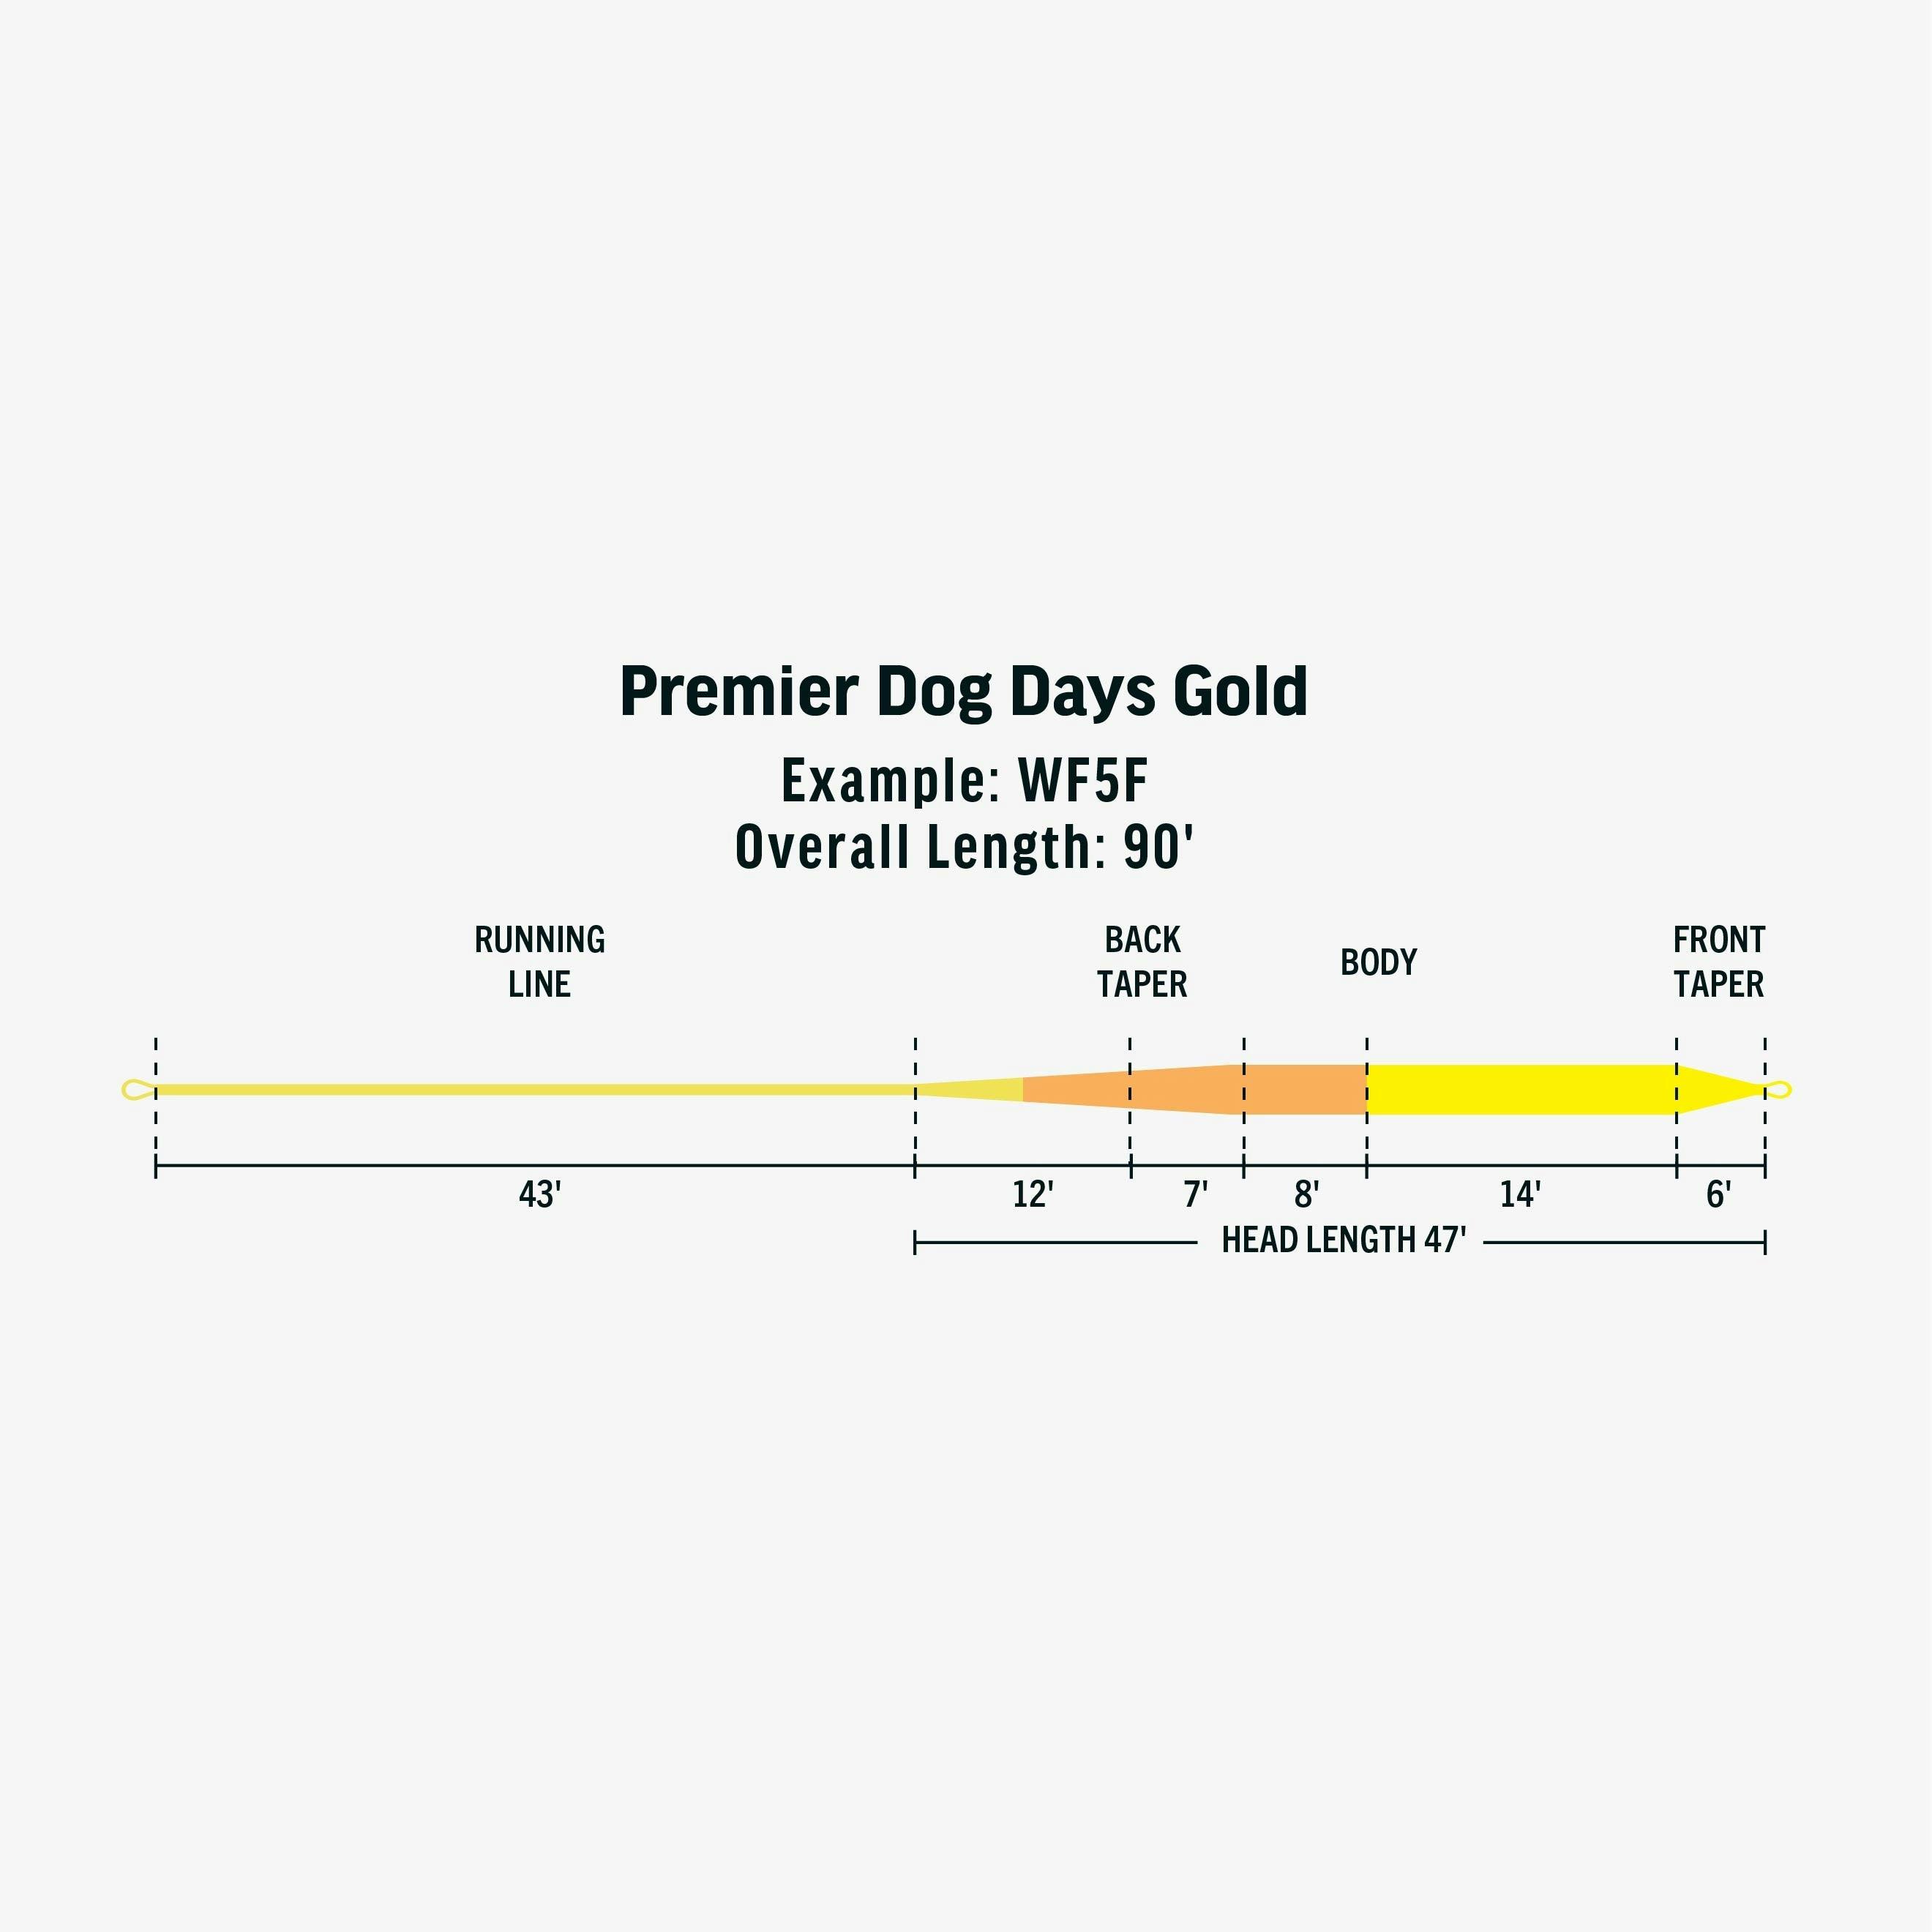 Rio Premier Dog Days Rio Gold Fly Line